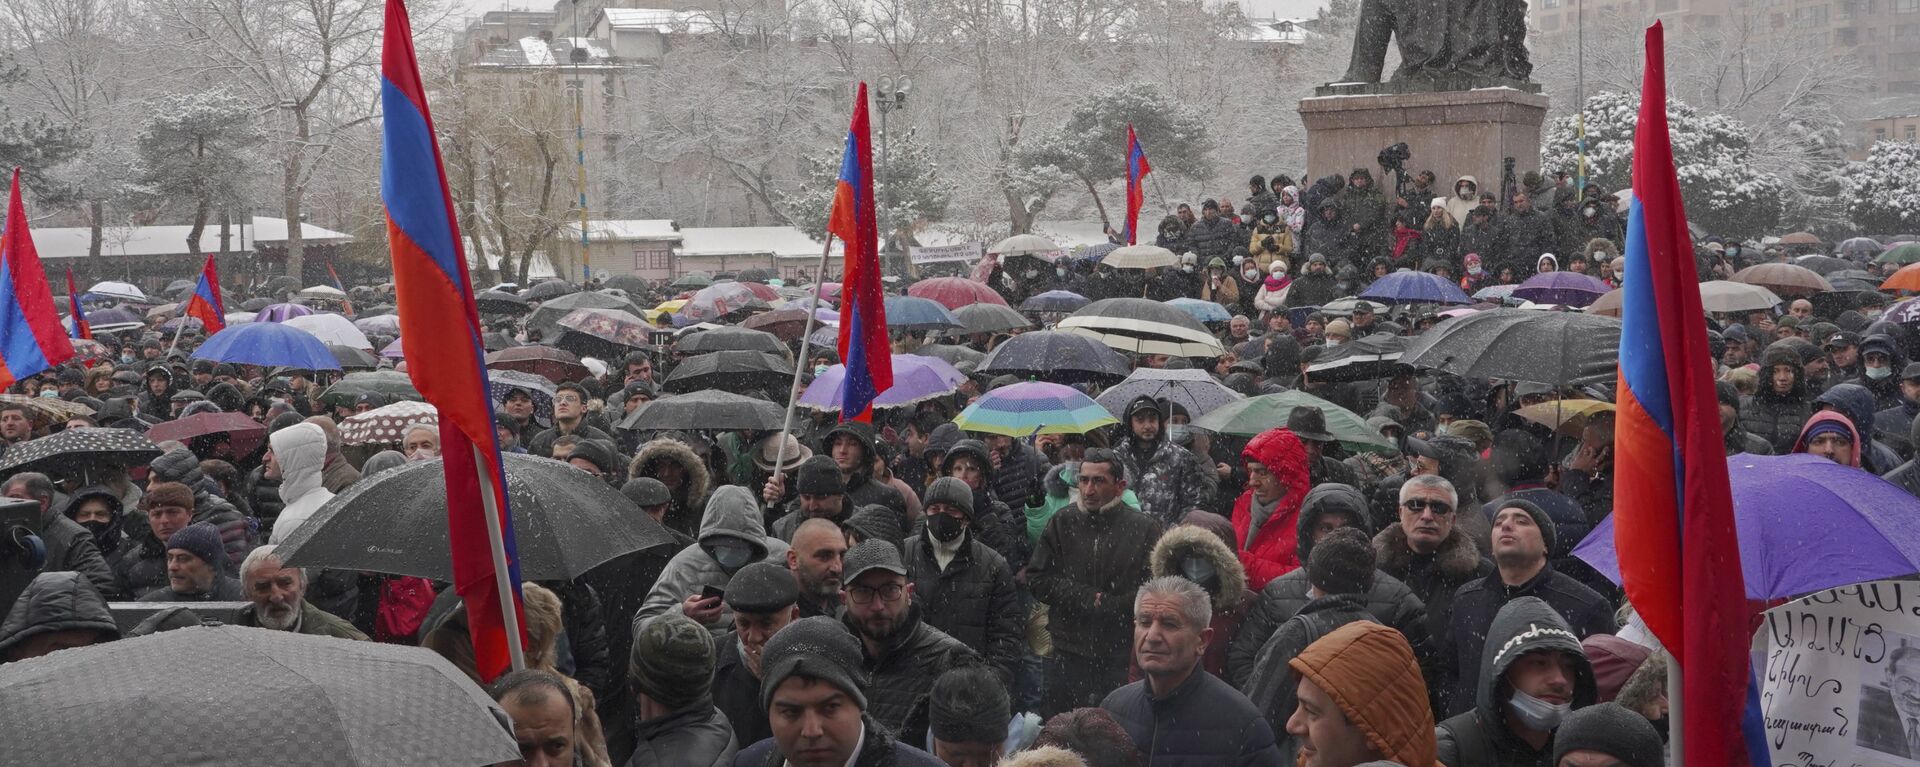 Протесты в Ереване, фото из архива - Sputnik Azərbaycan, 1920, 01.05.2022